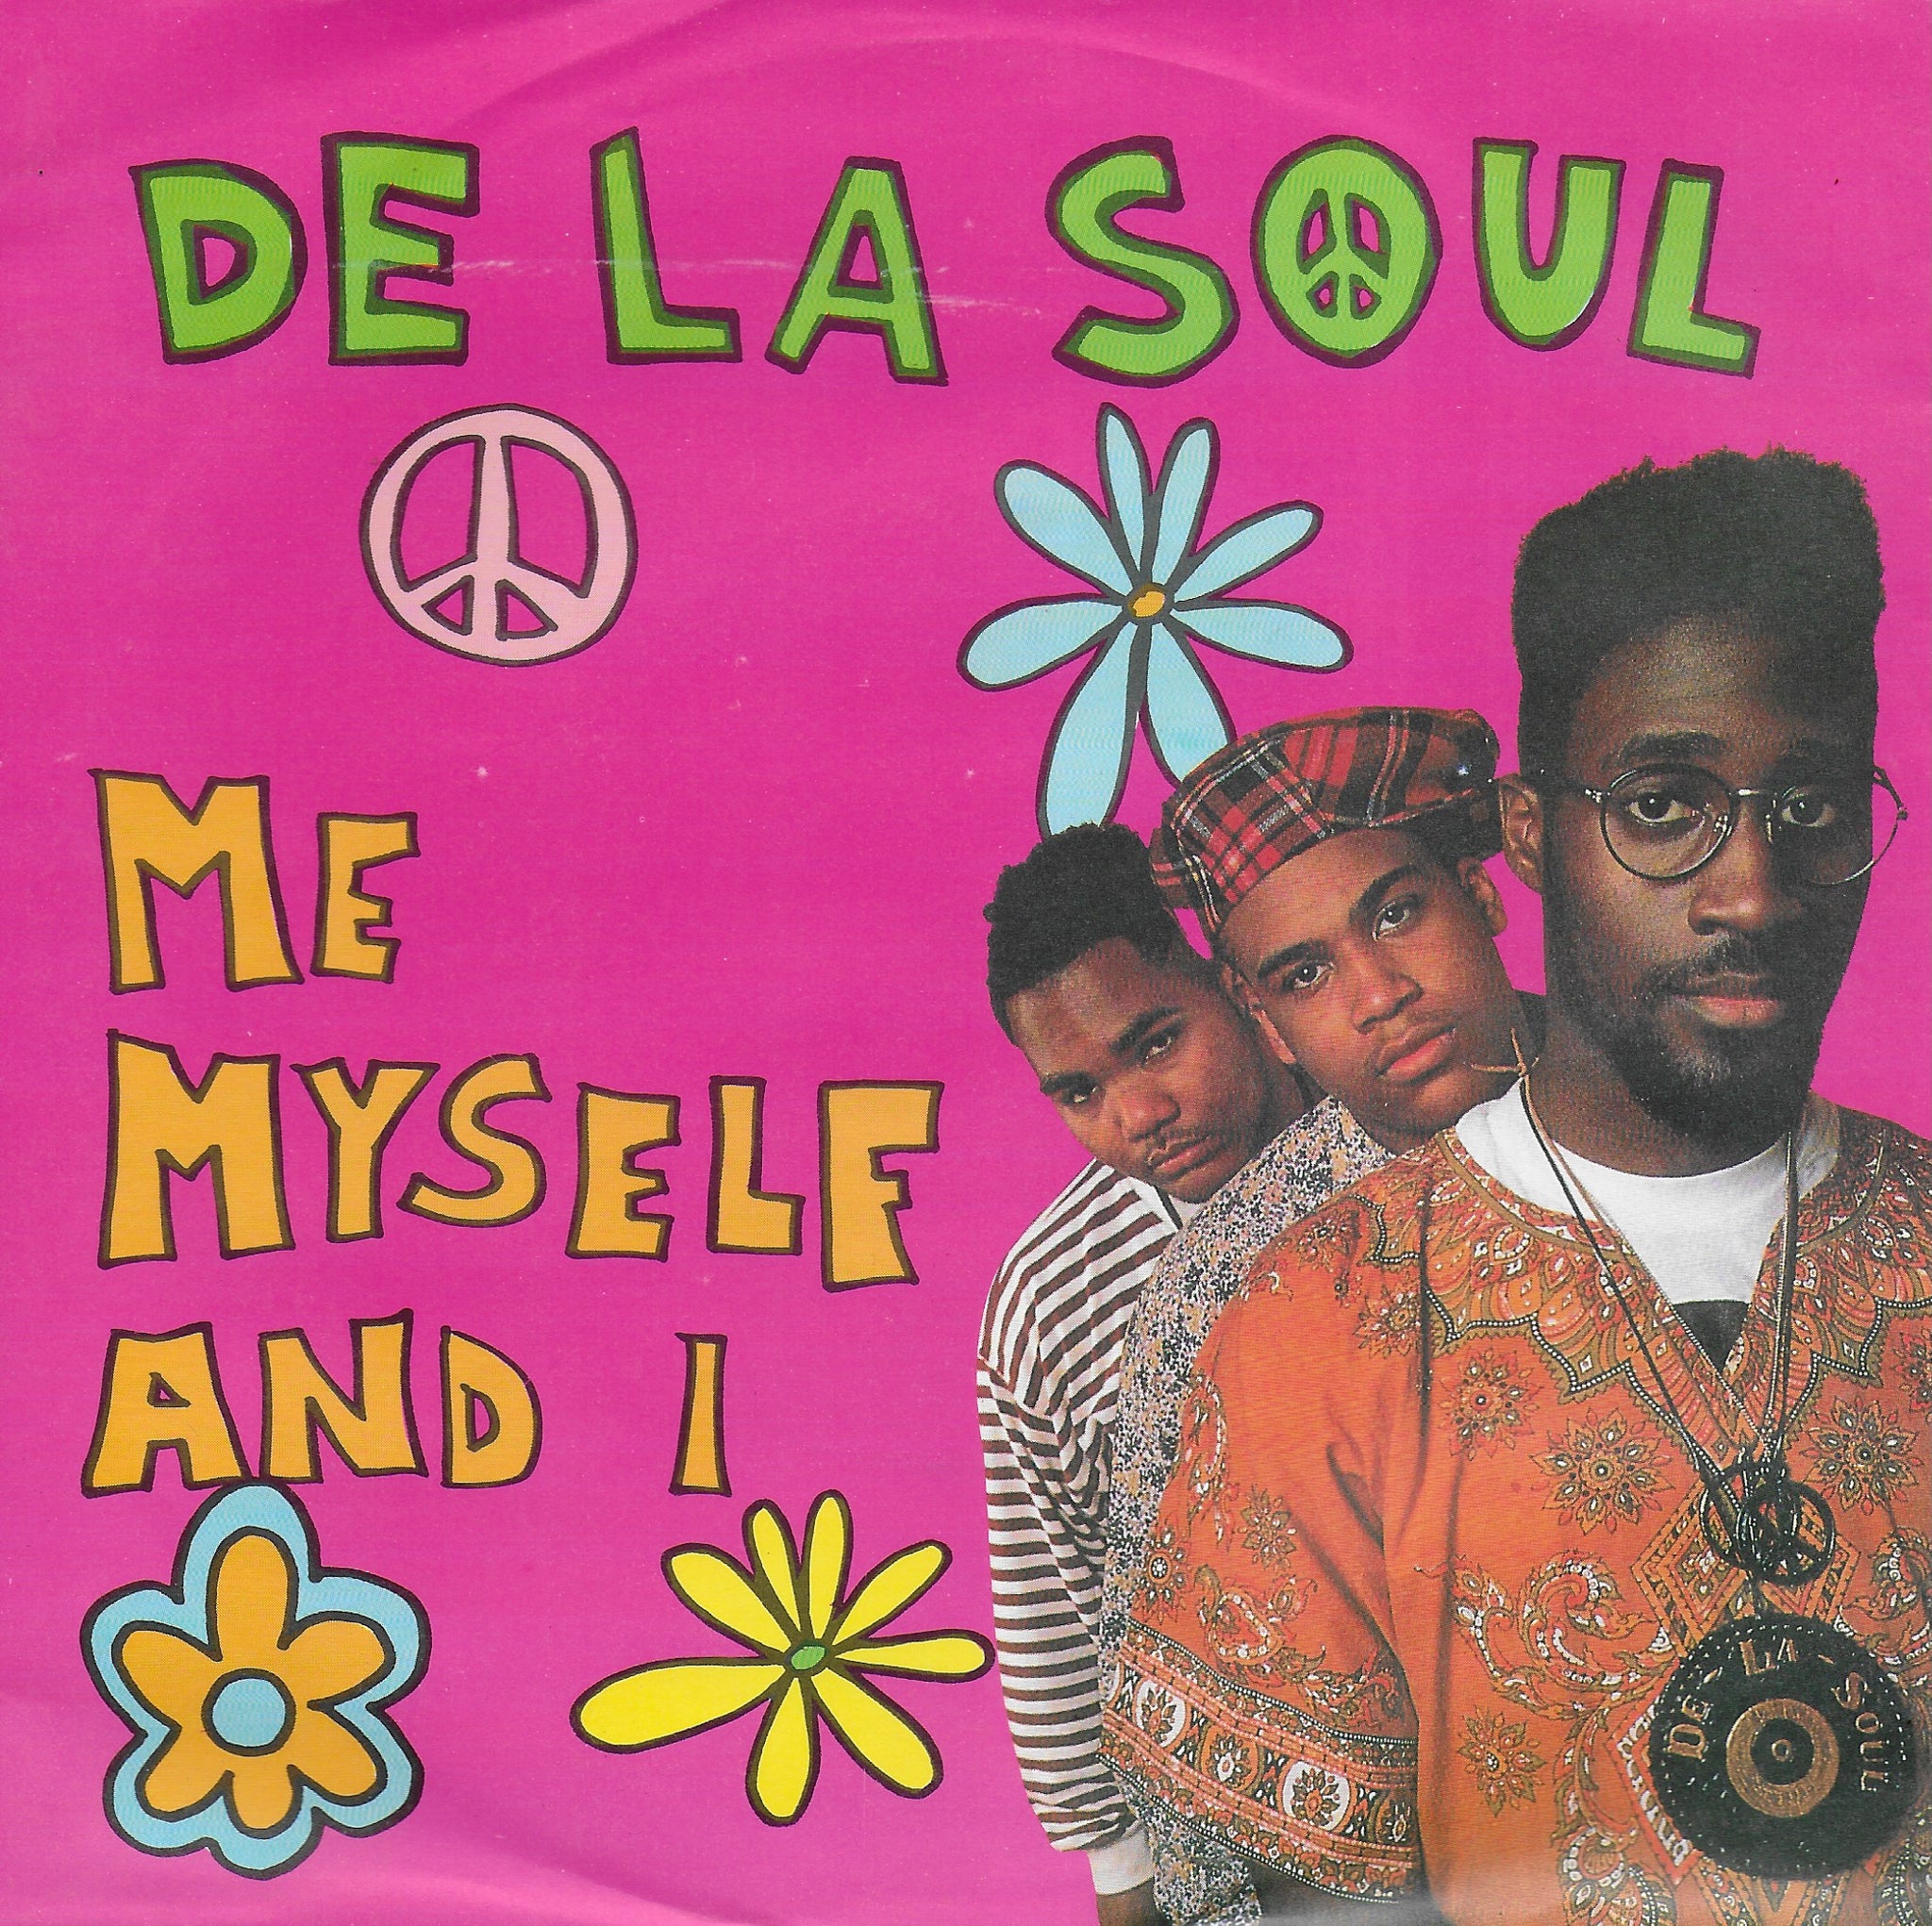 De La Soul - Me Myself and I